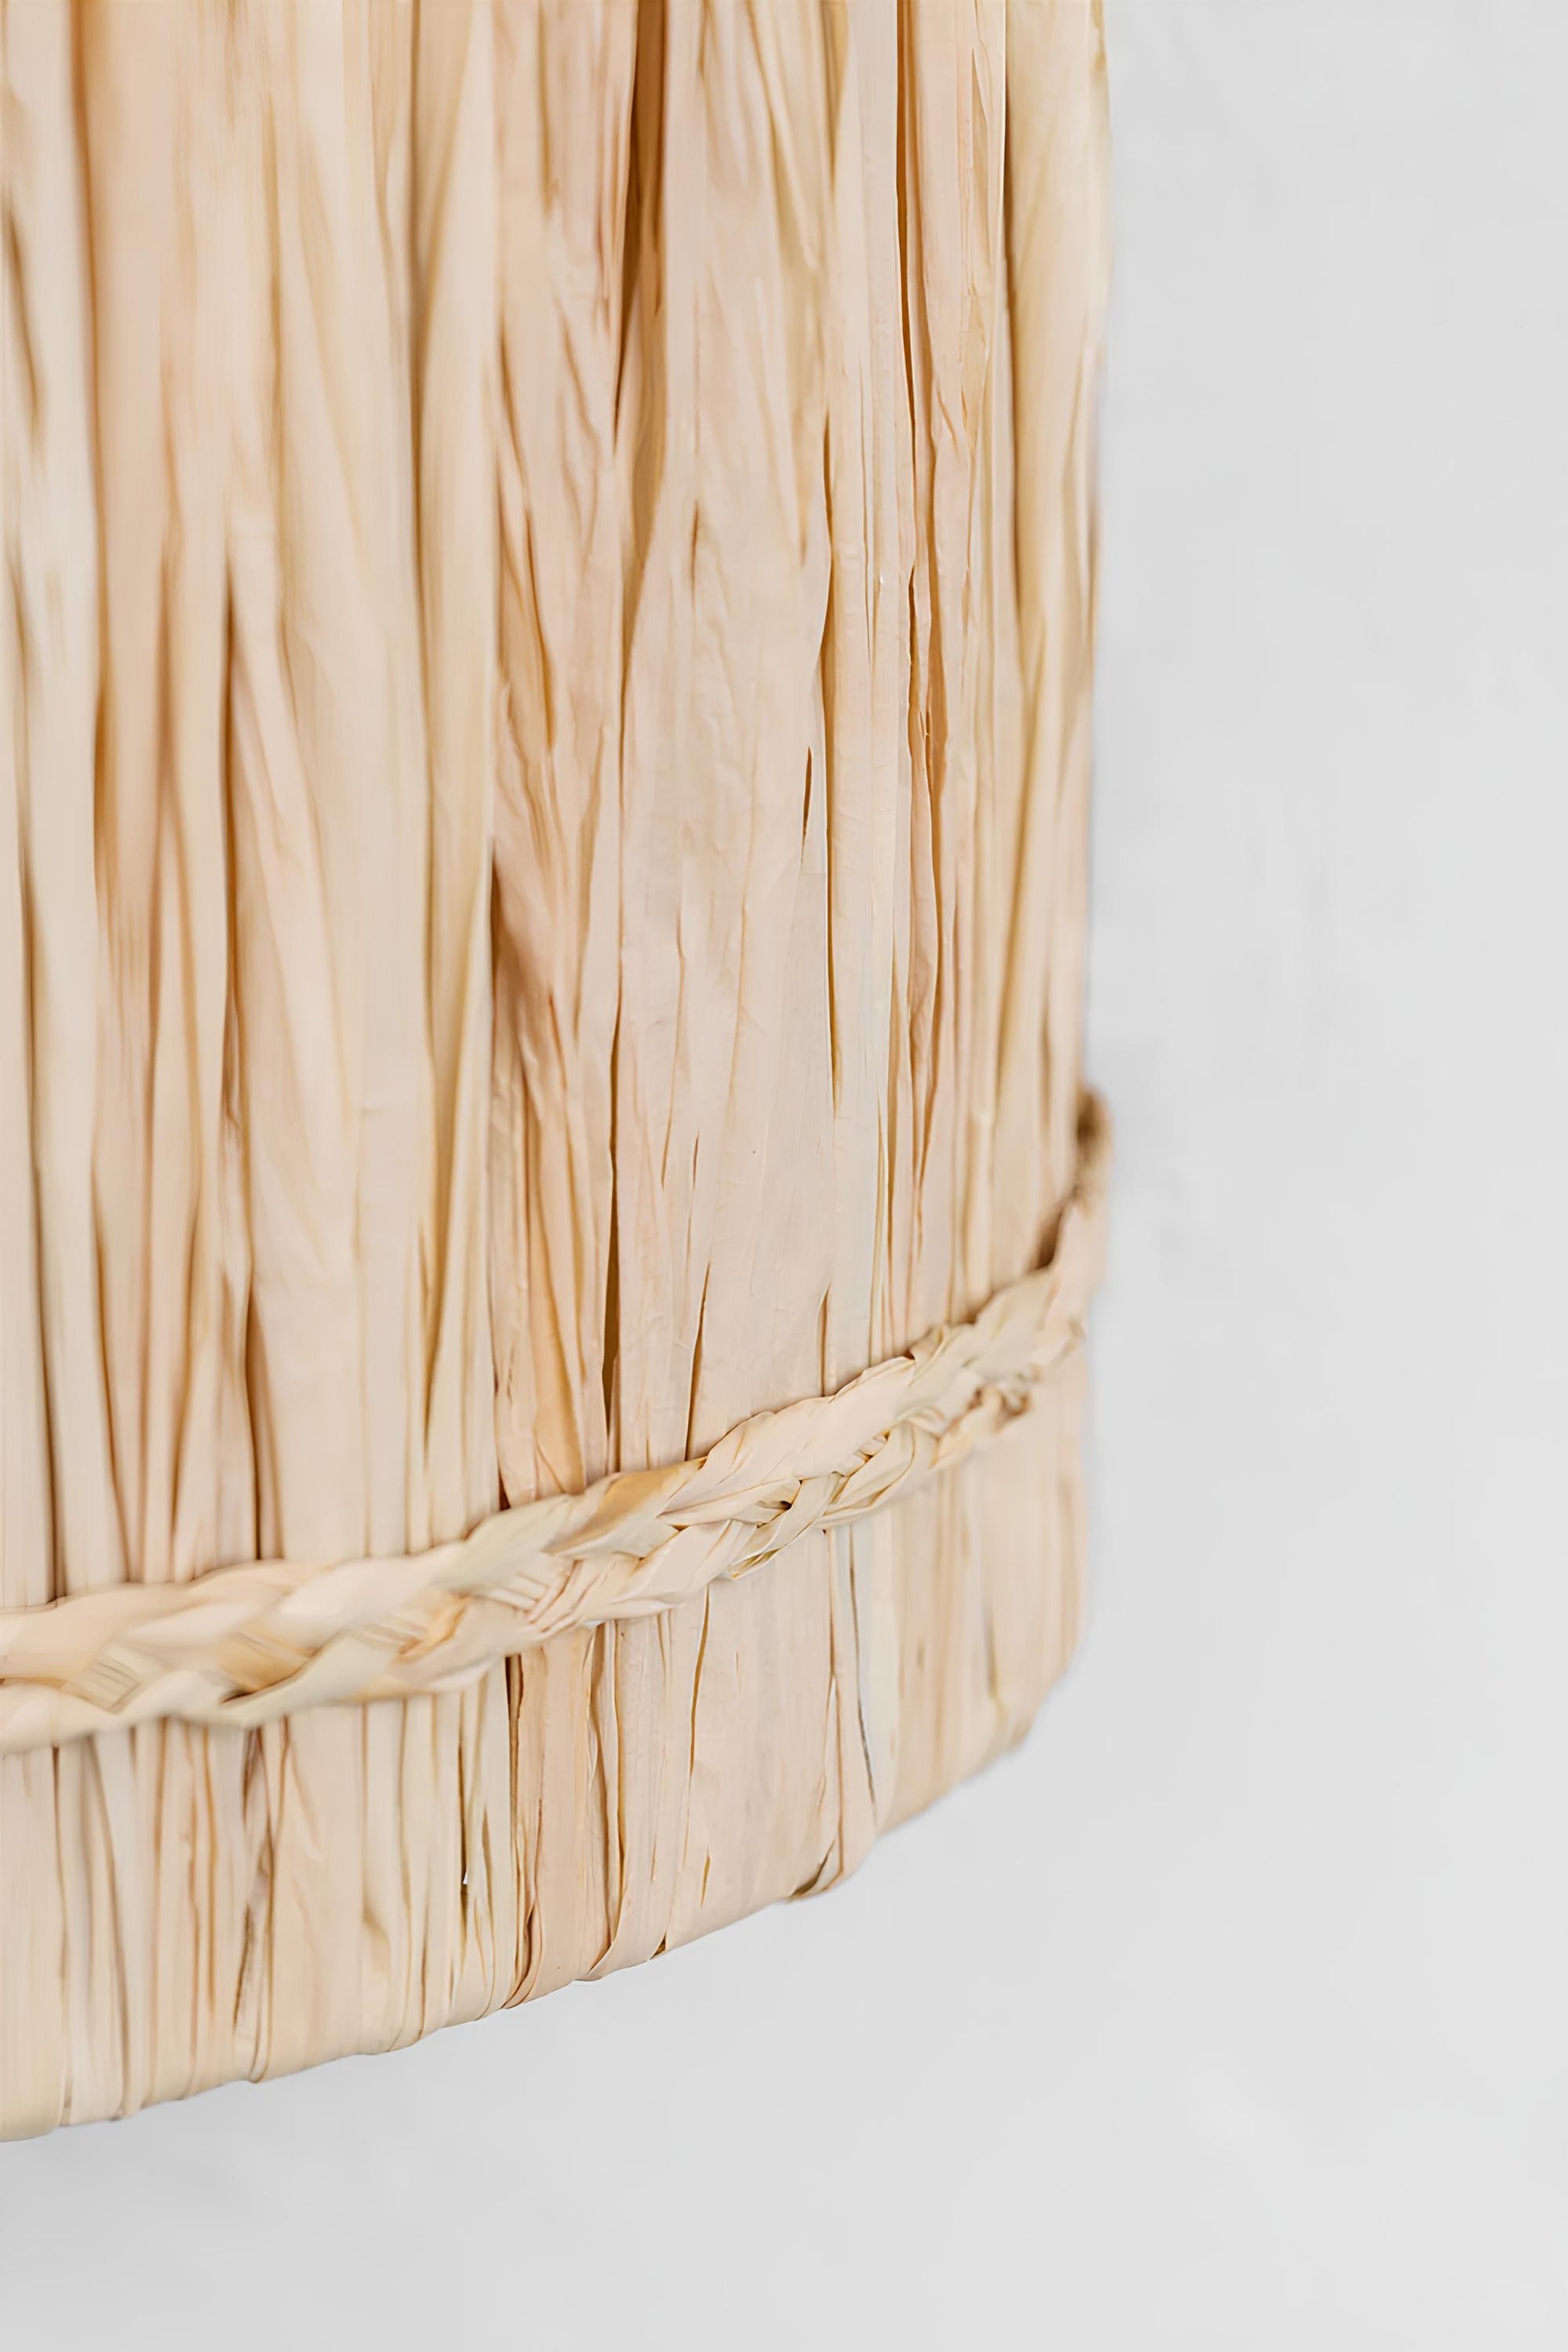 Bamboo Wall lamps For Living Room | Rattan Wall scones | Wicker Wall Lamps | Cane Wall Scones - Shanaya - Akway